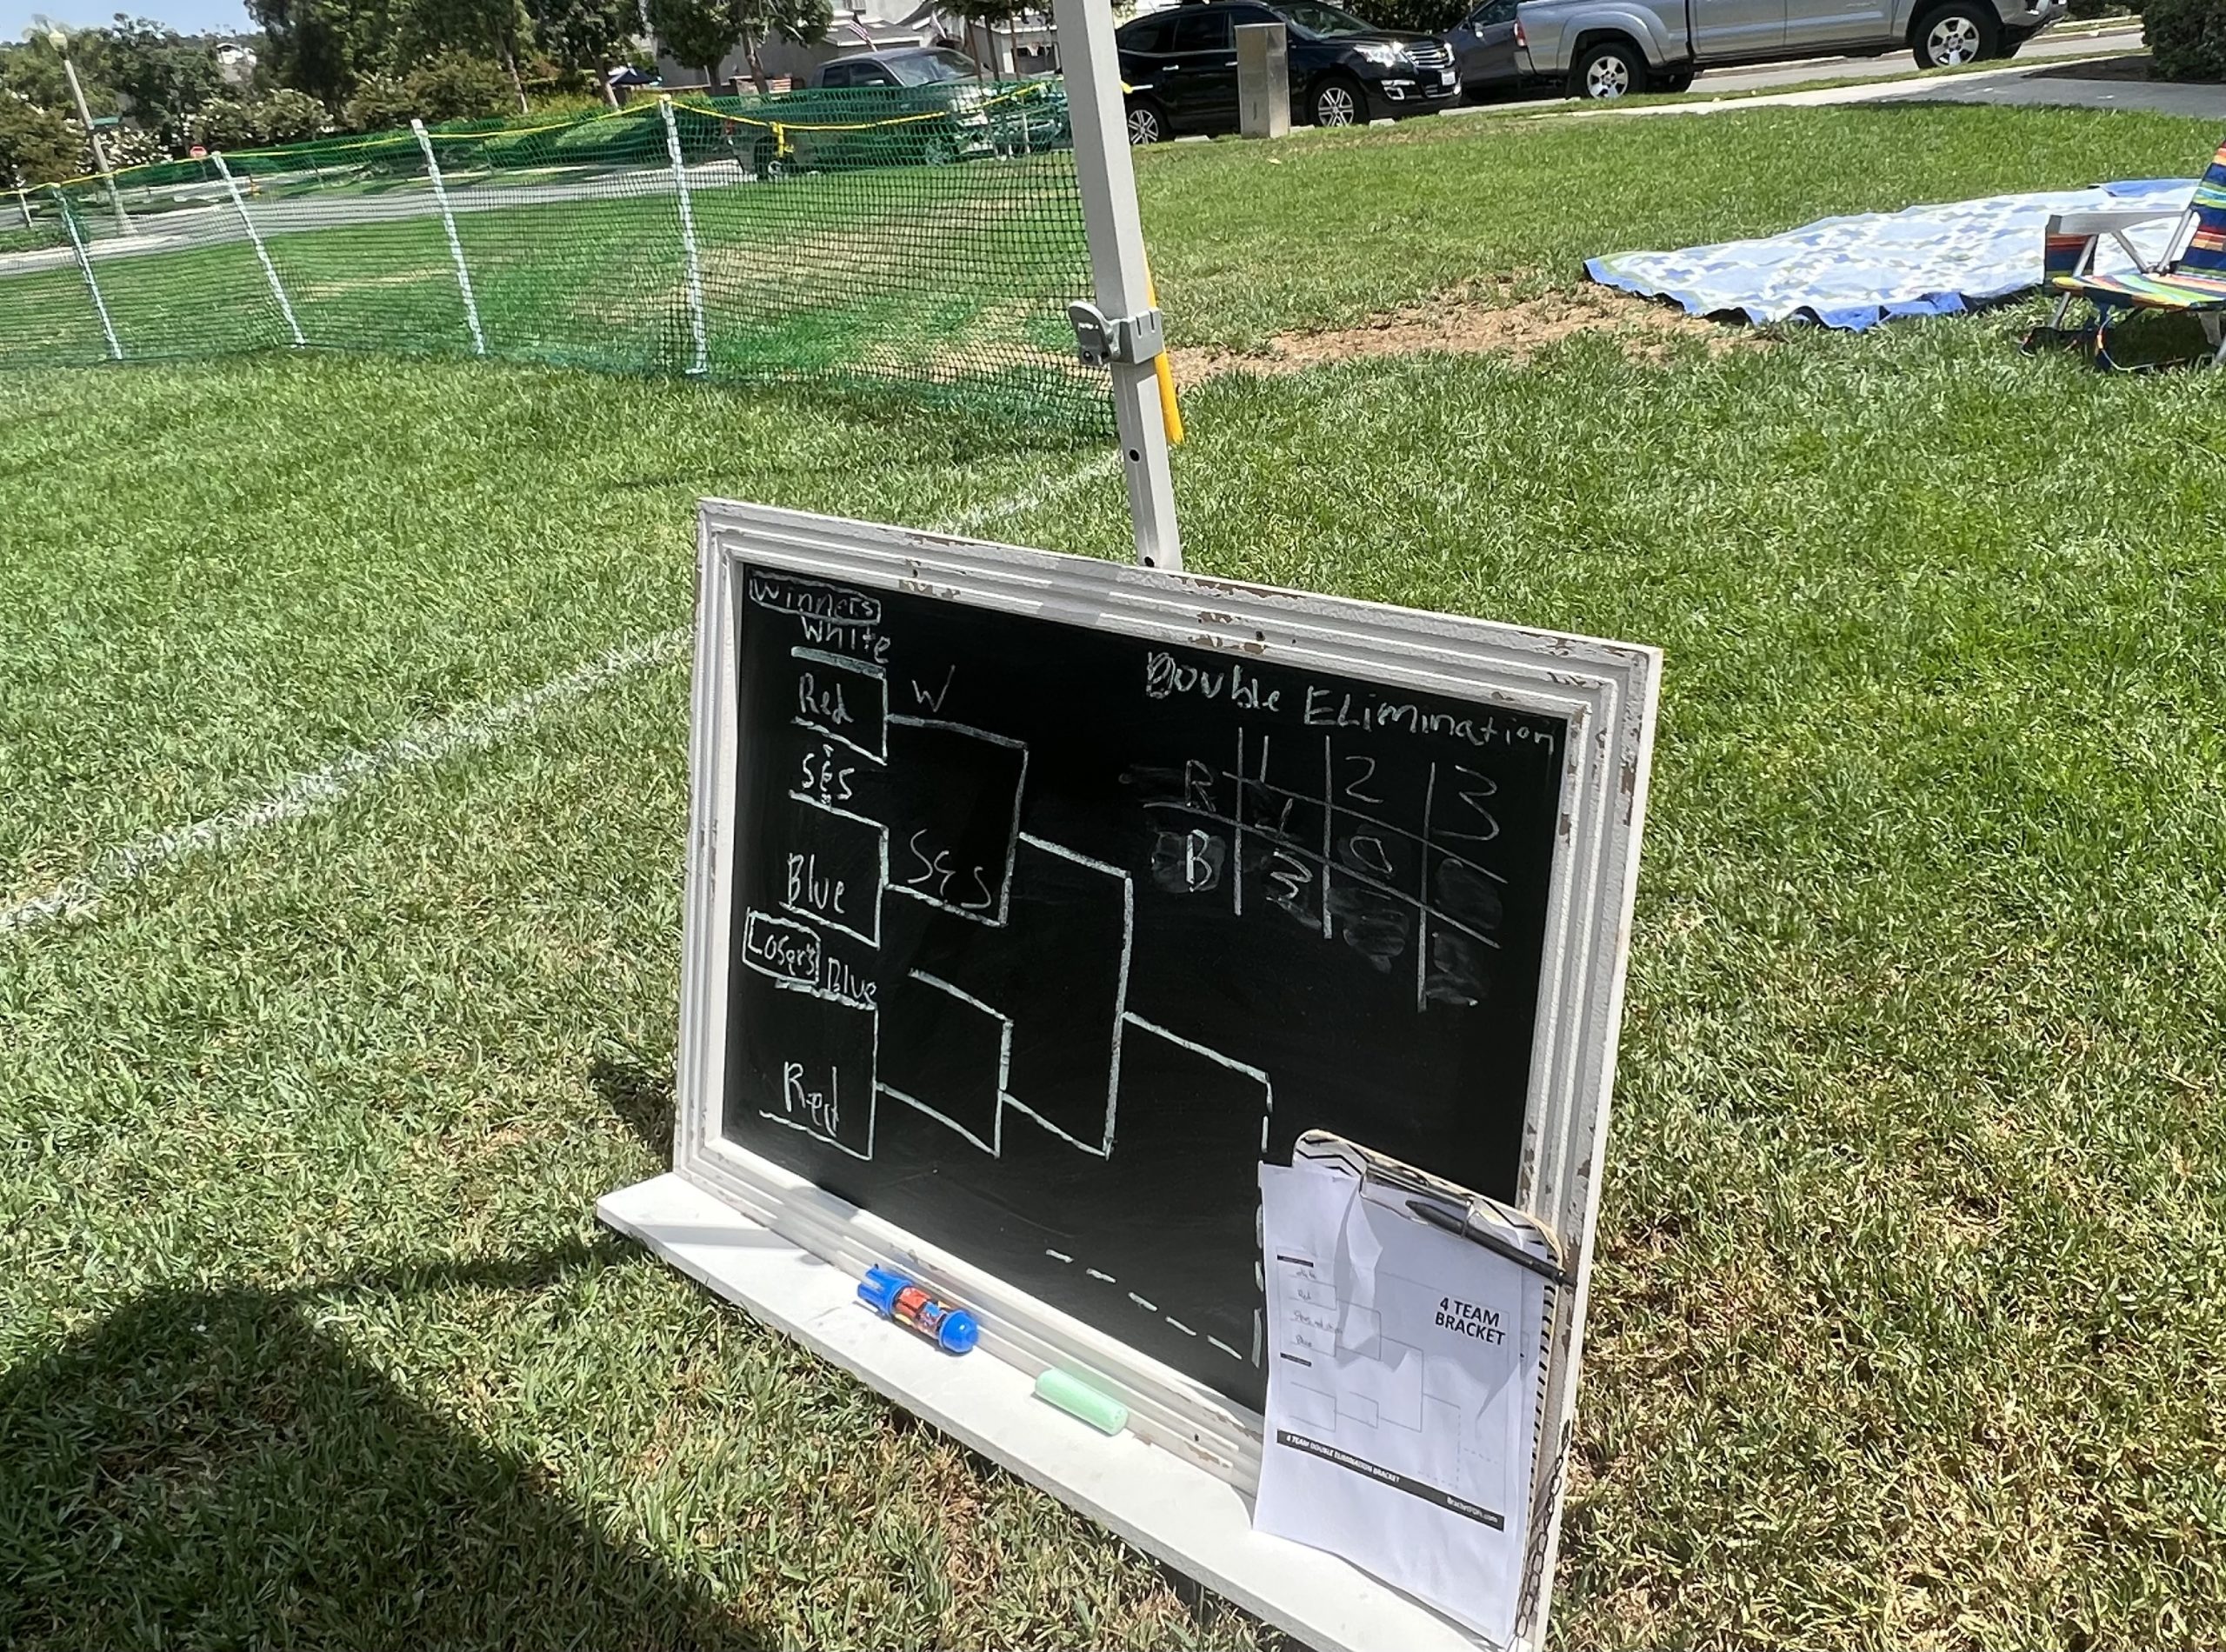 Chalkboard scoreboard for wiffle ball tournament